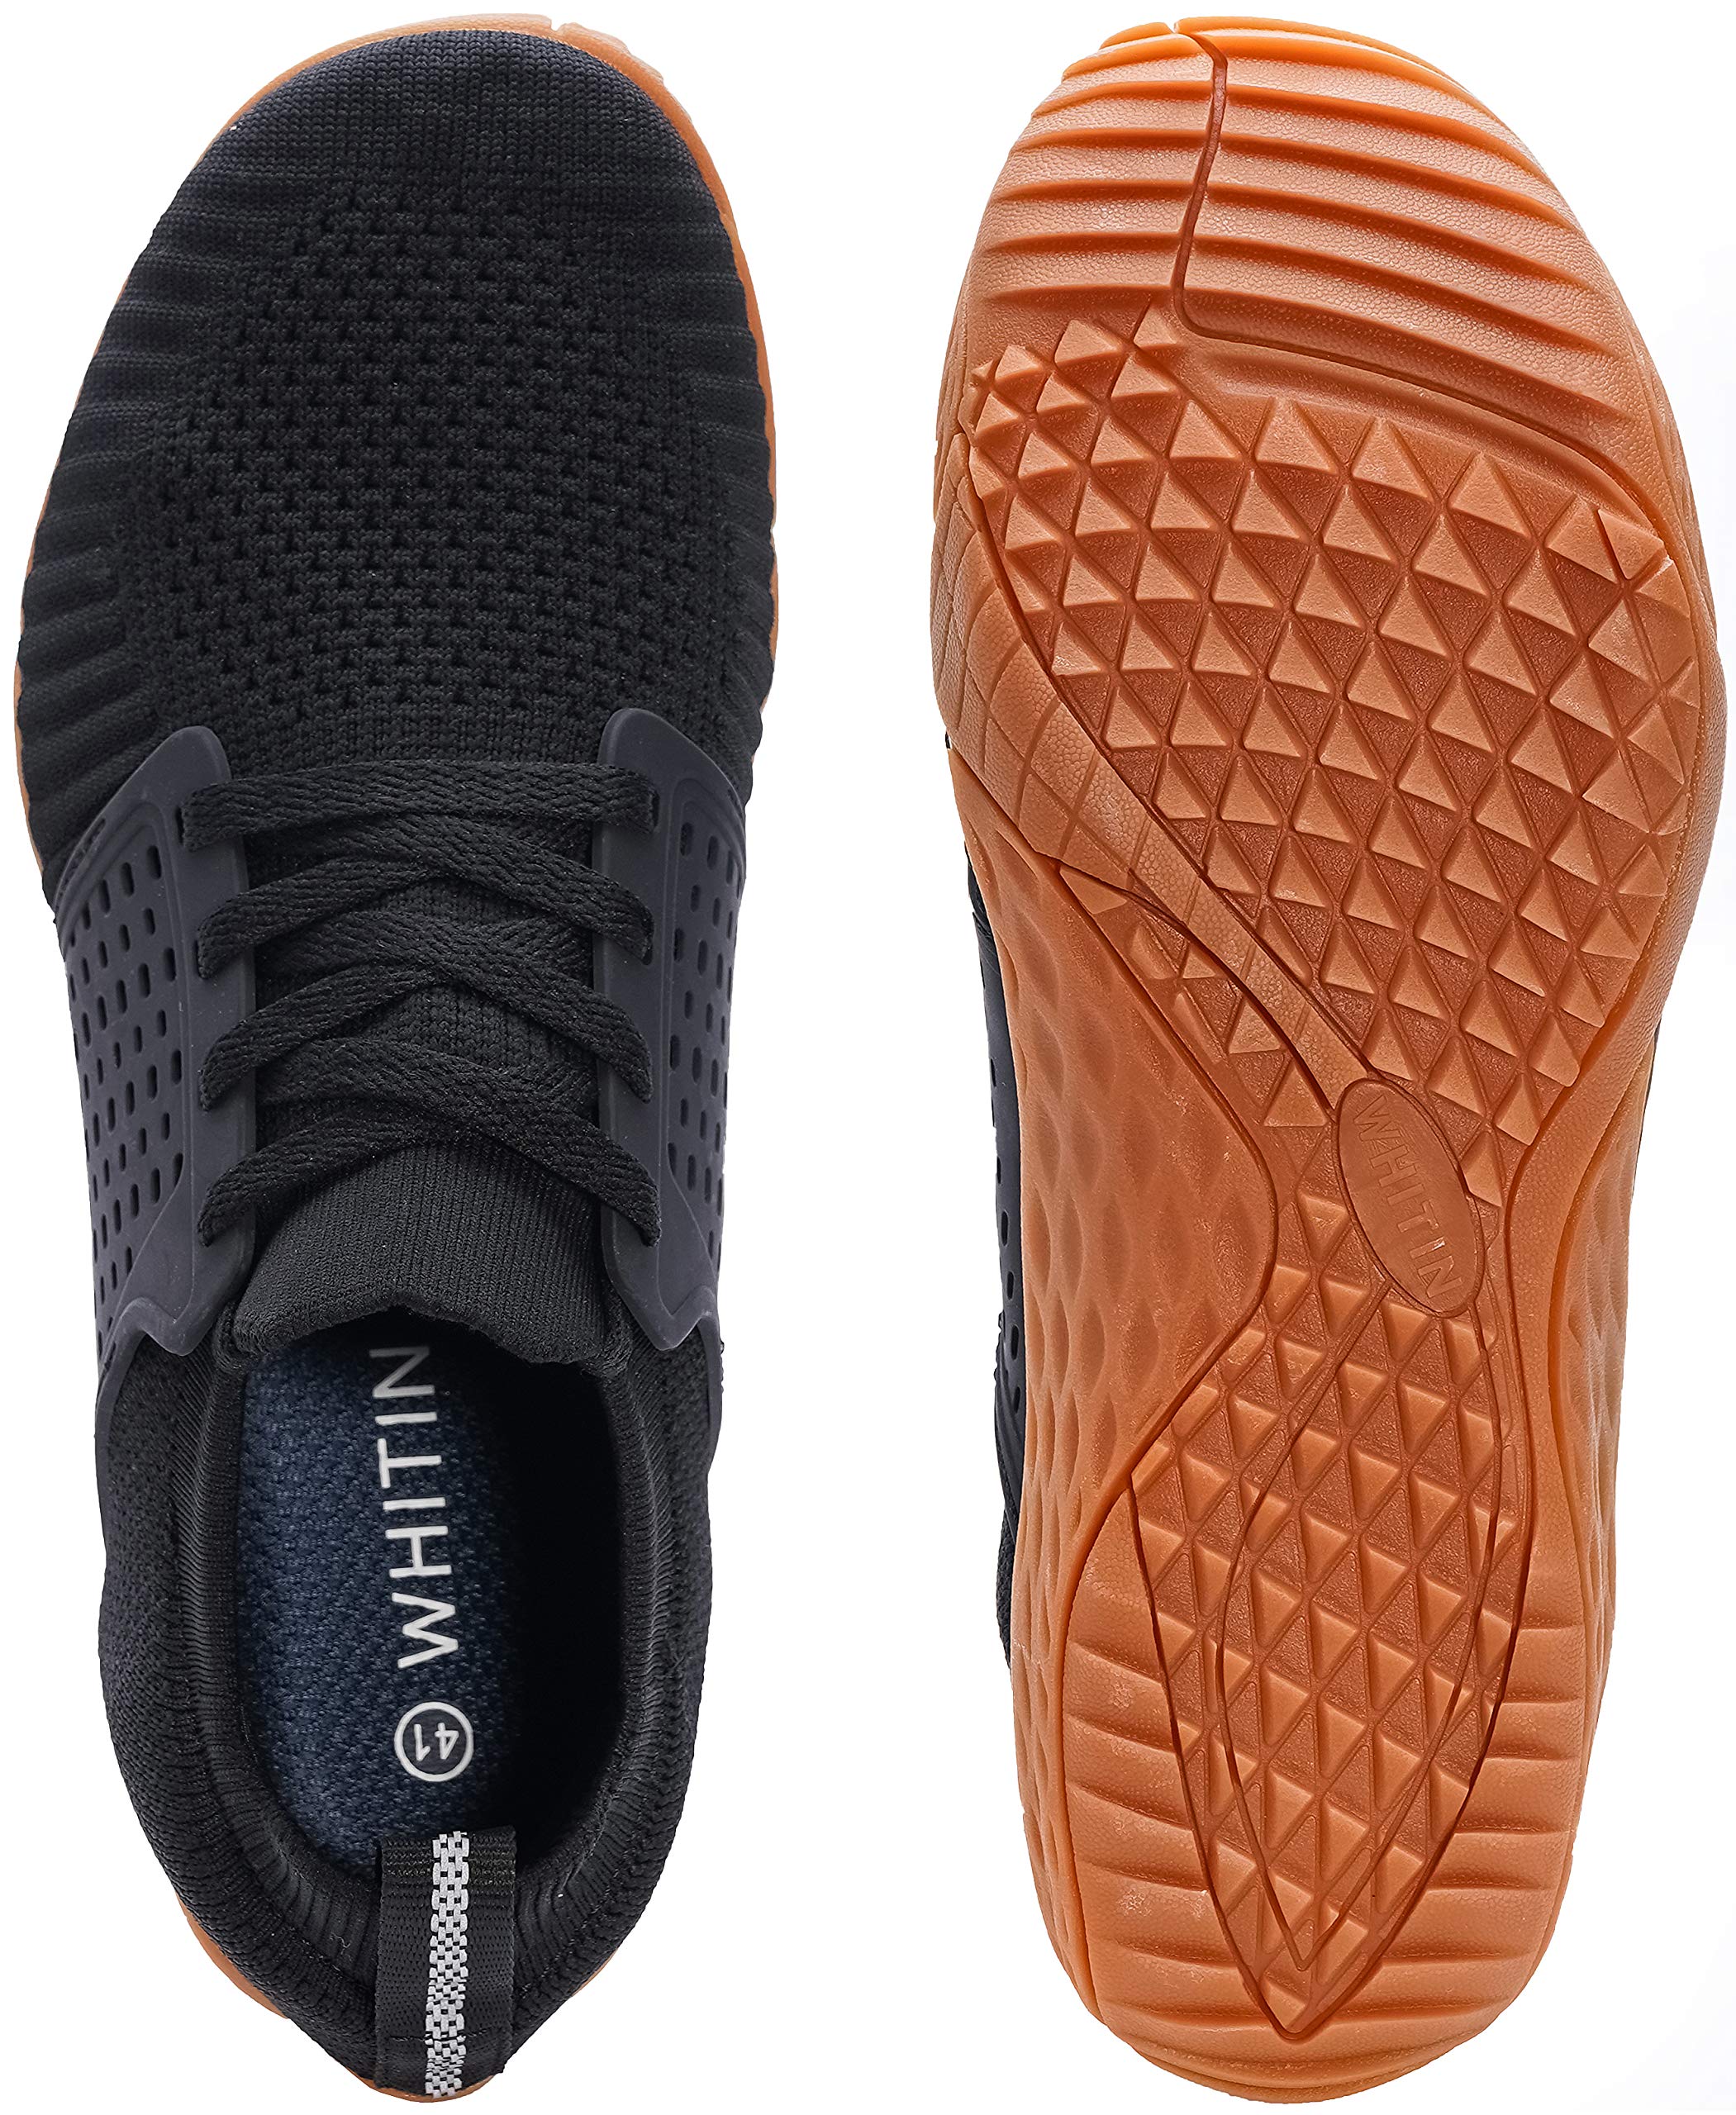 WHITIN Men's Trail Running Shoes Barefoot Minimalist Wide Width Size 14 Low Zero Drop Toe Box Gym Workout Beach Fitness Sport Comfortable Black Gum 48